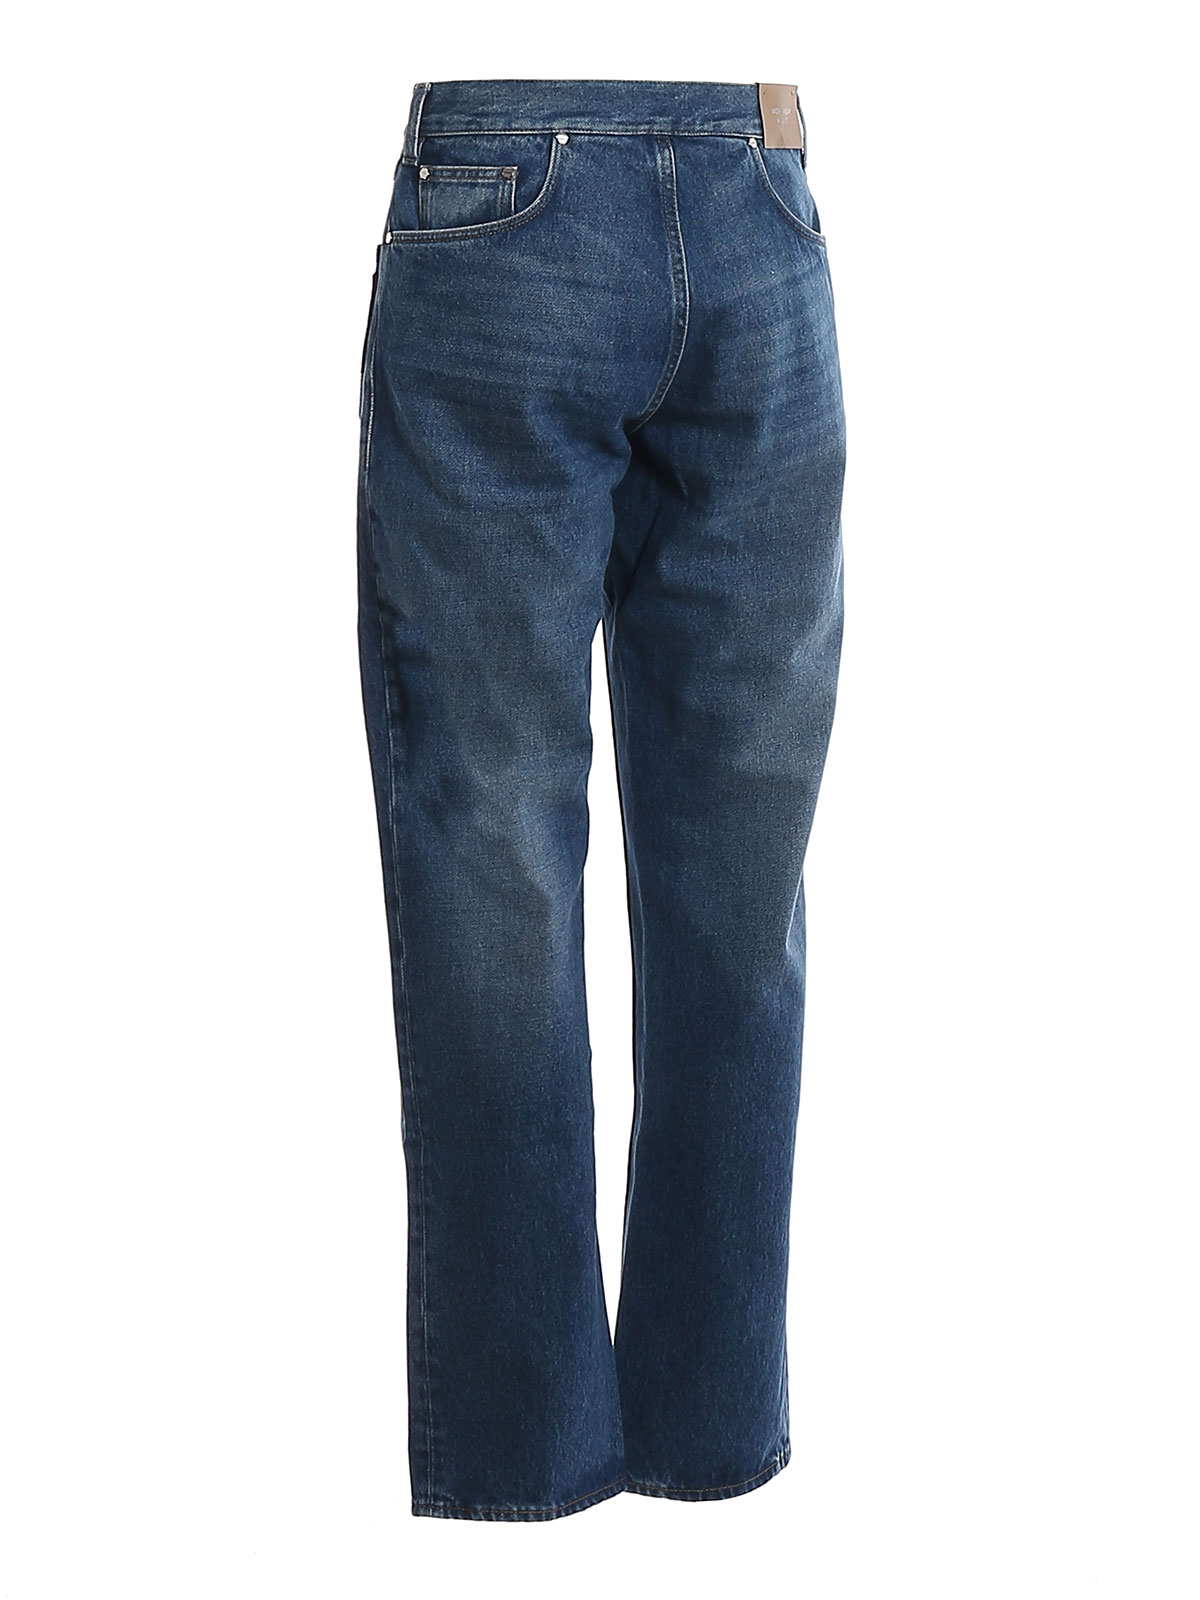 Flared jeans Burberry - Workwear washed denim jeans - 8025376 | iKRIX.com